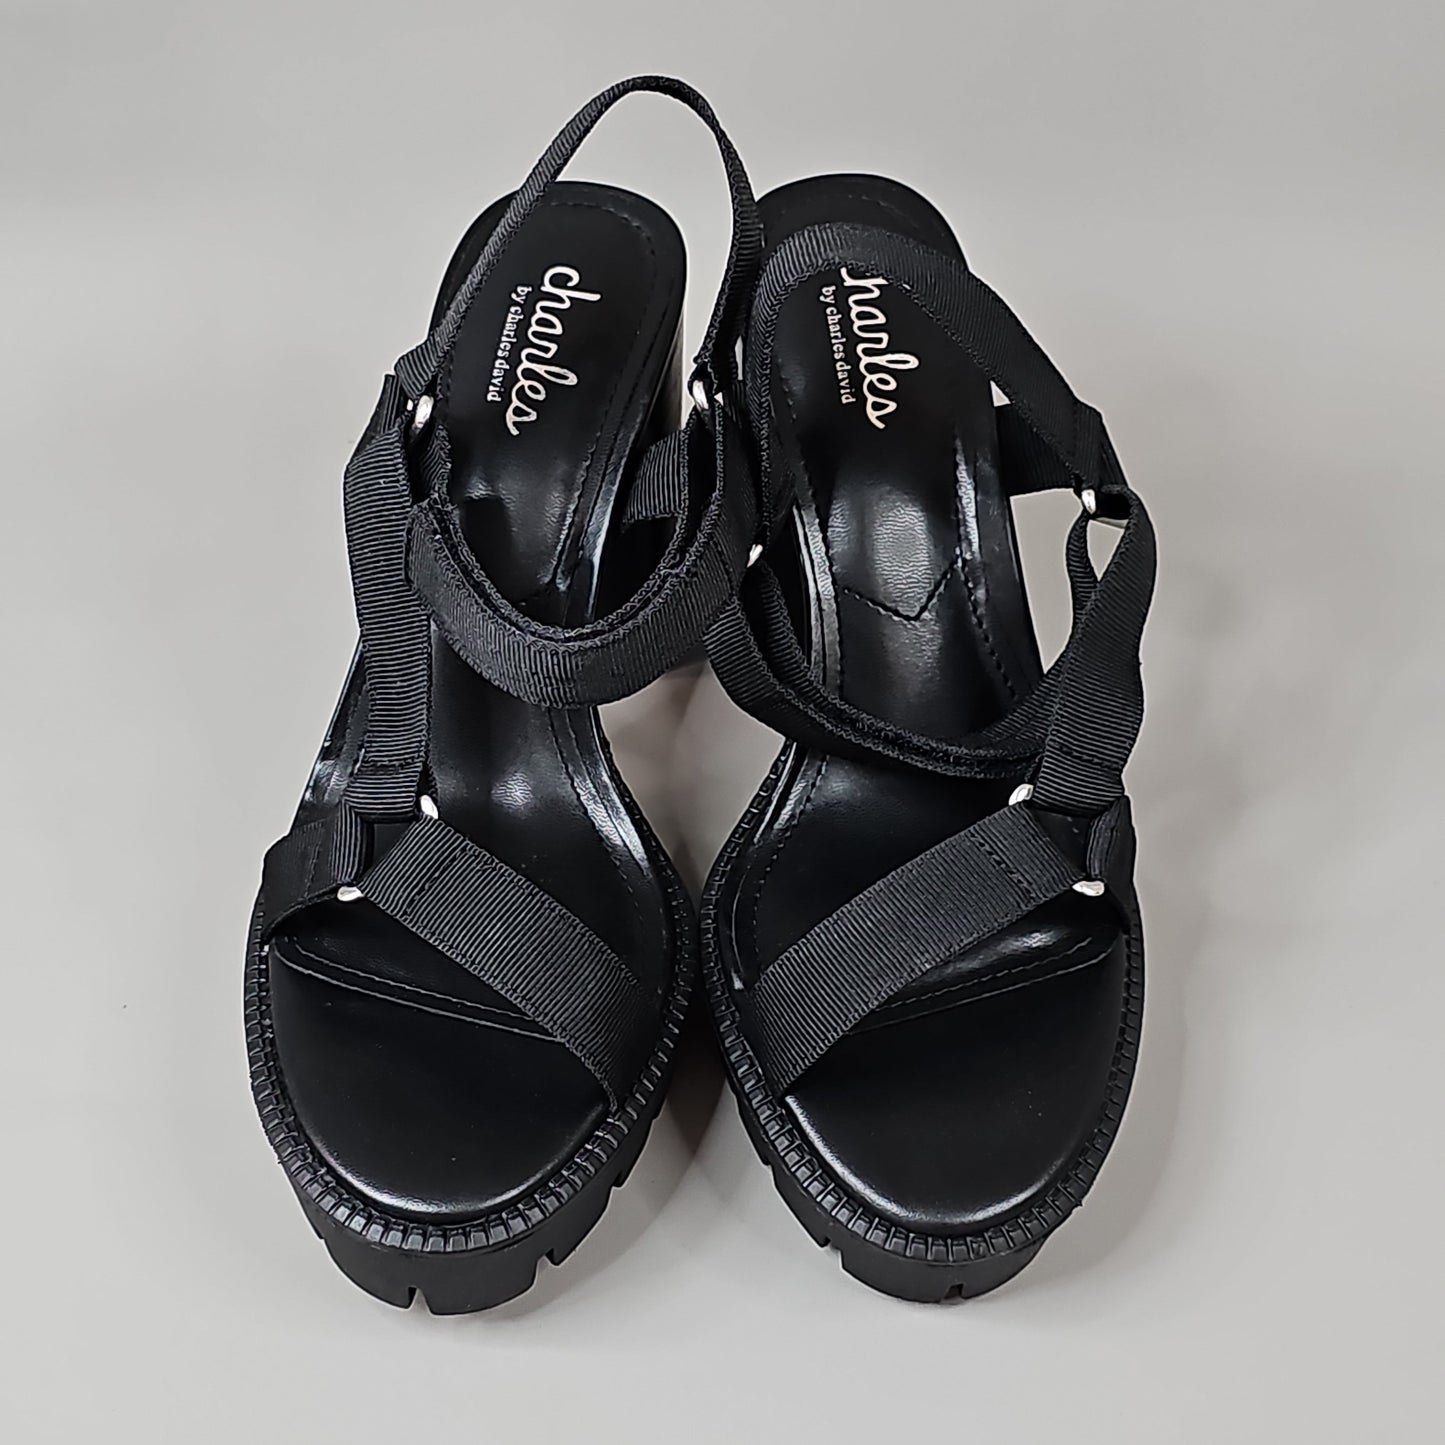 CHARLES BY CHARLES DAVID Women's Vast Sport Sandal Shoe Sz 6.5 M Black (New)